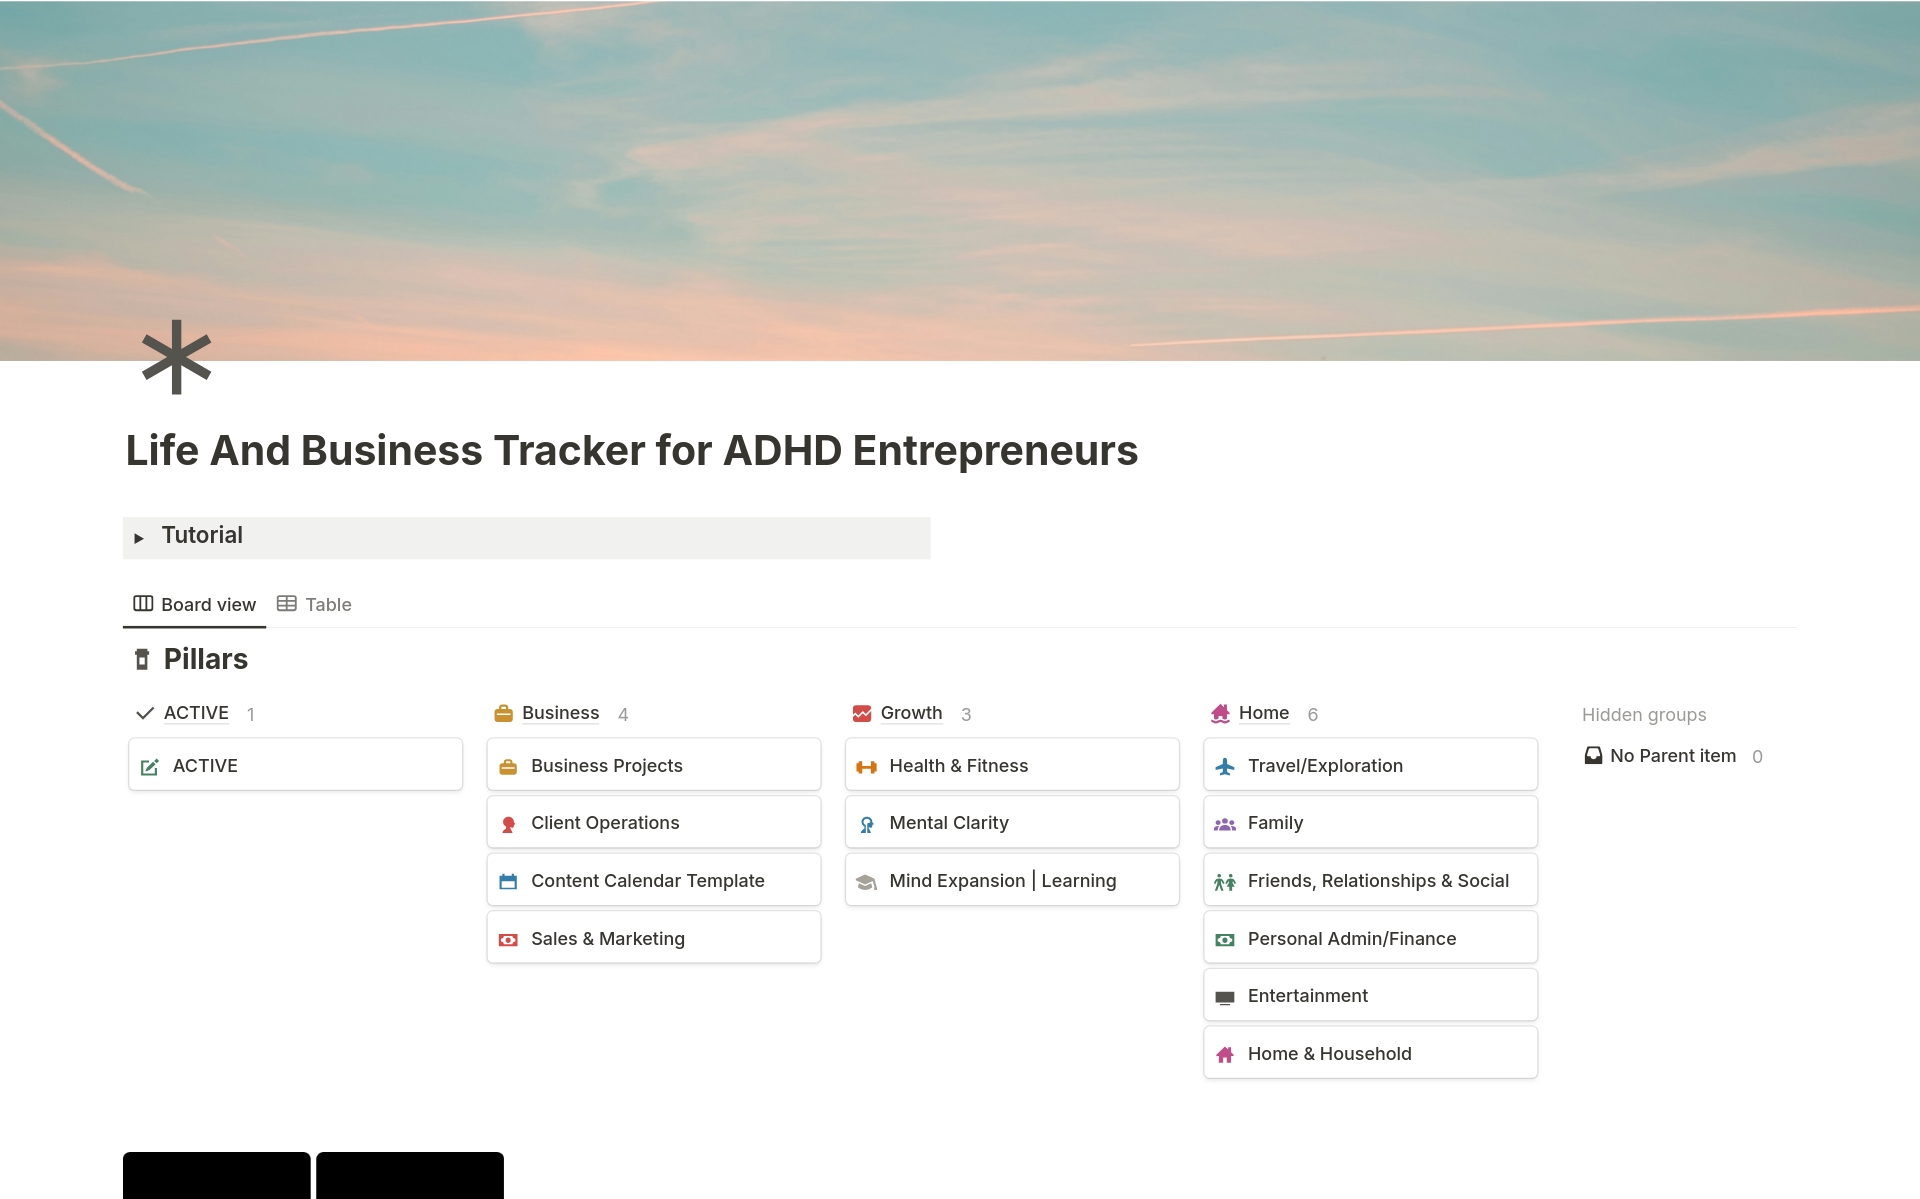 Life & Business Tracker for ADHD Entrepreneurs님의 템플릿 미리보기